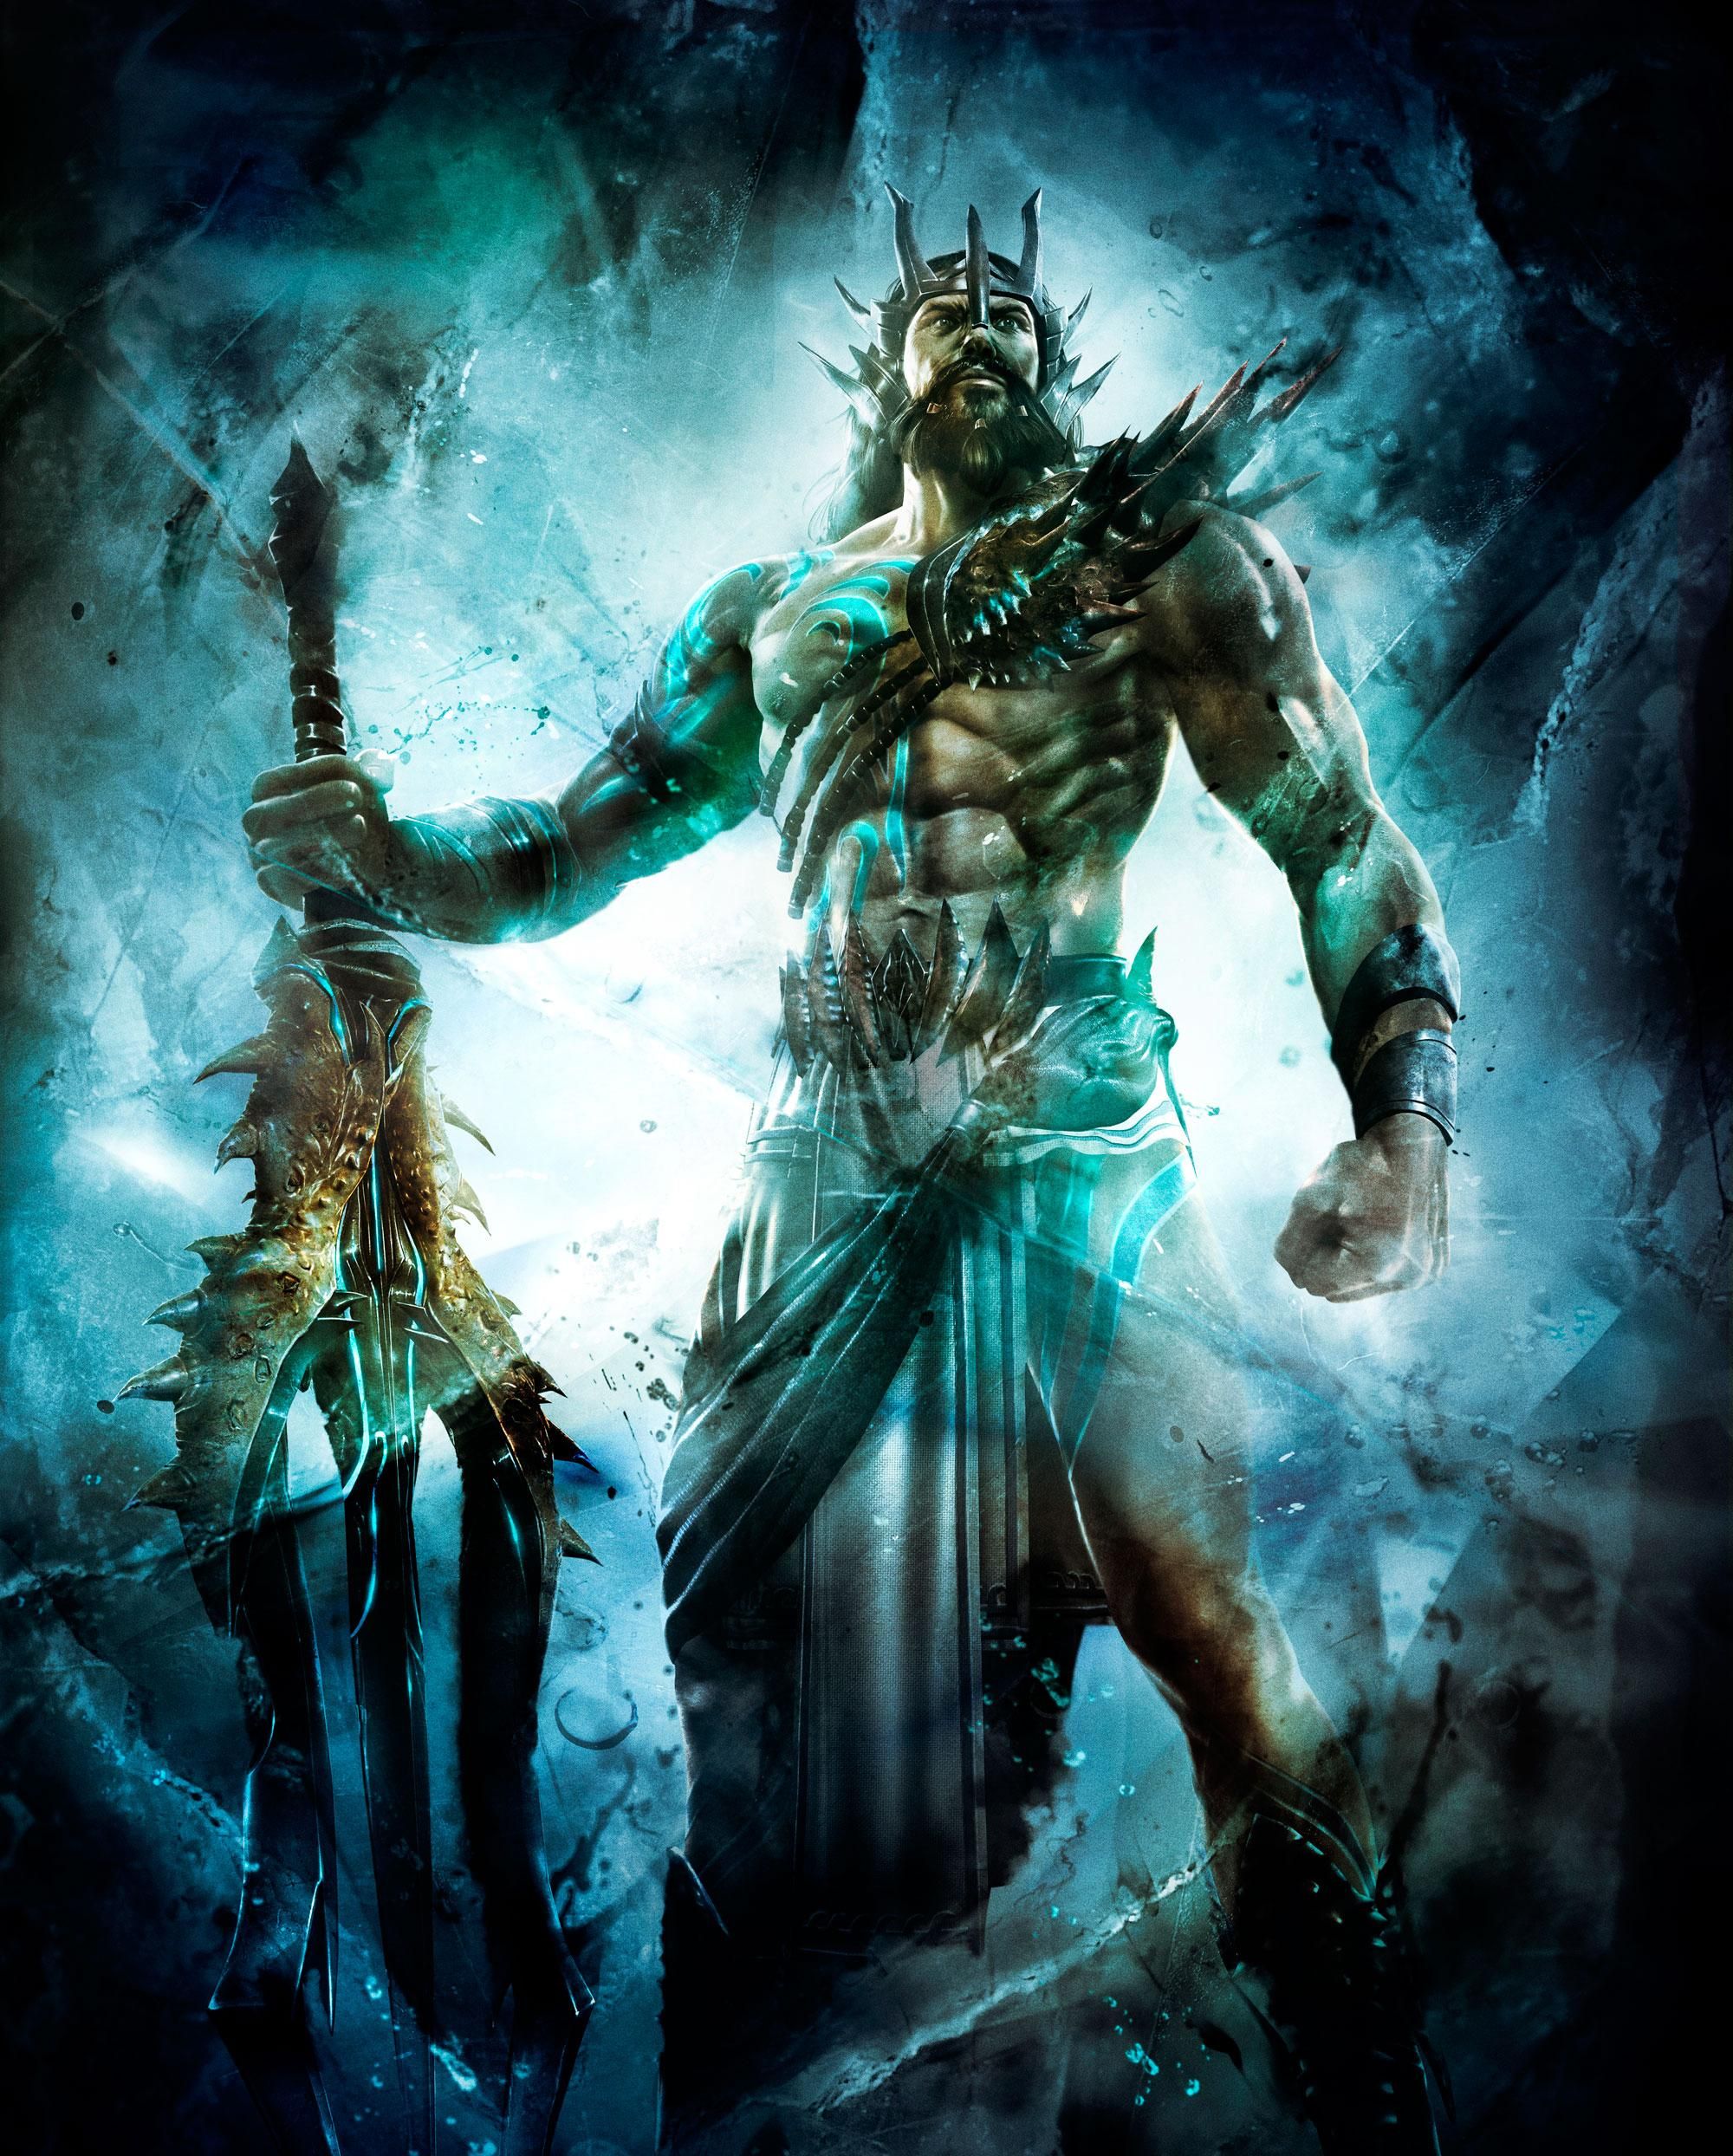 poseidon from god of war 3 fighting kratos